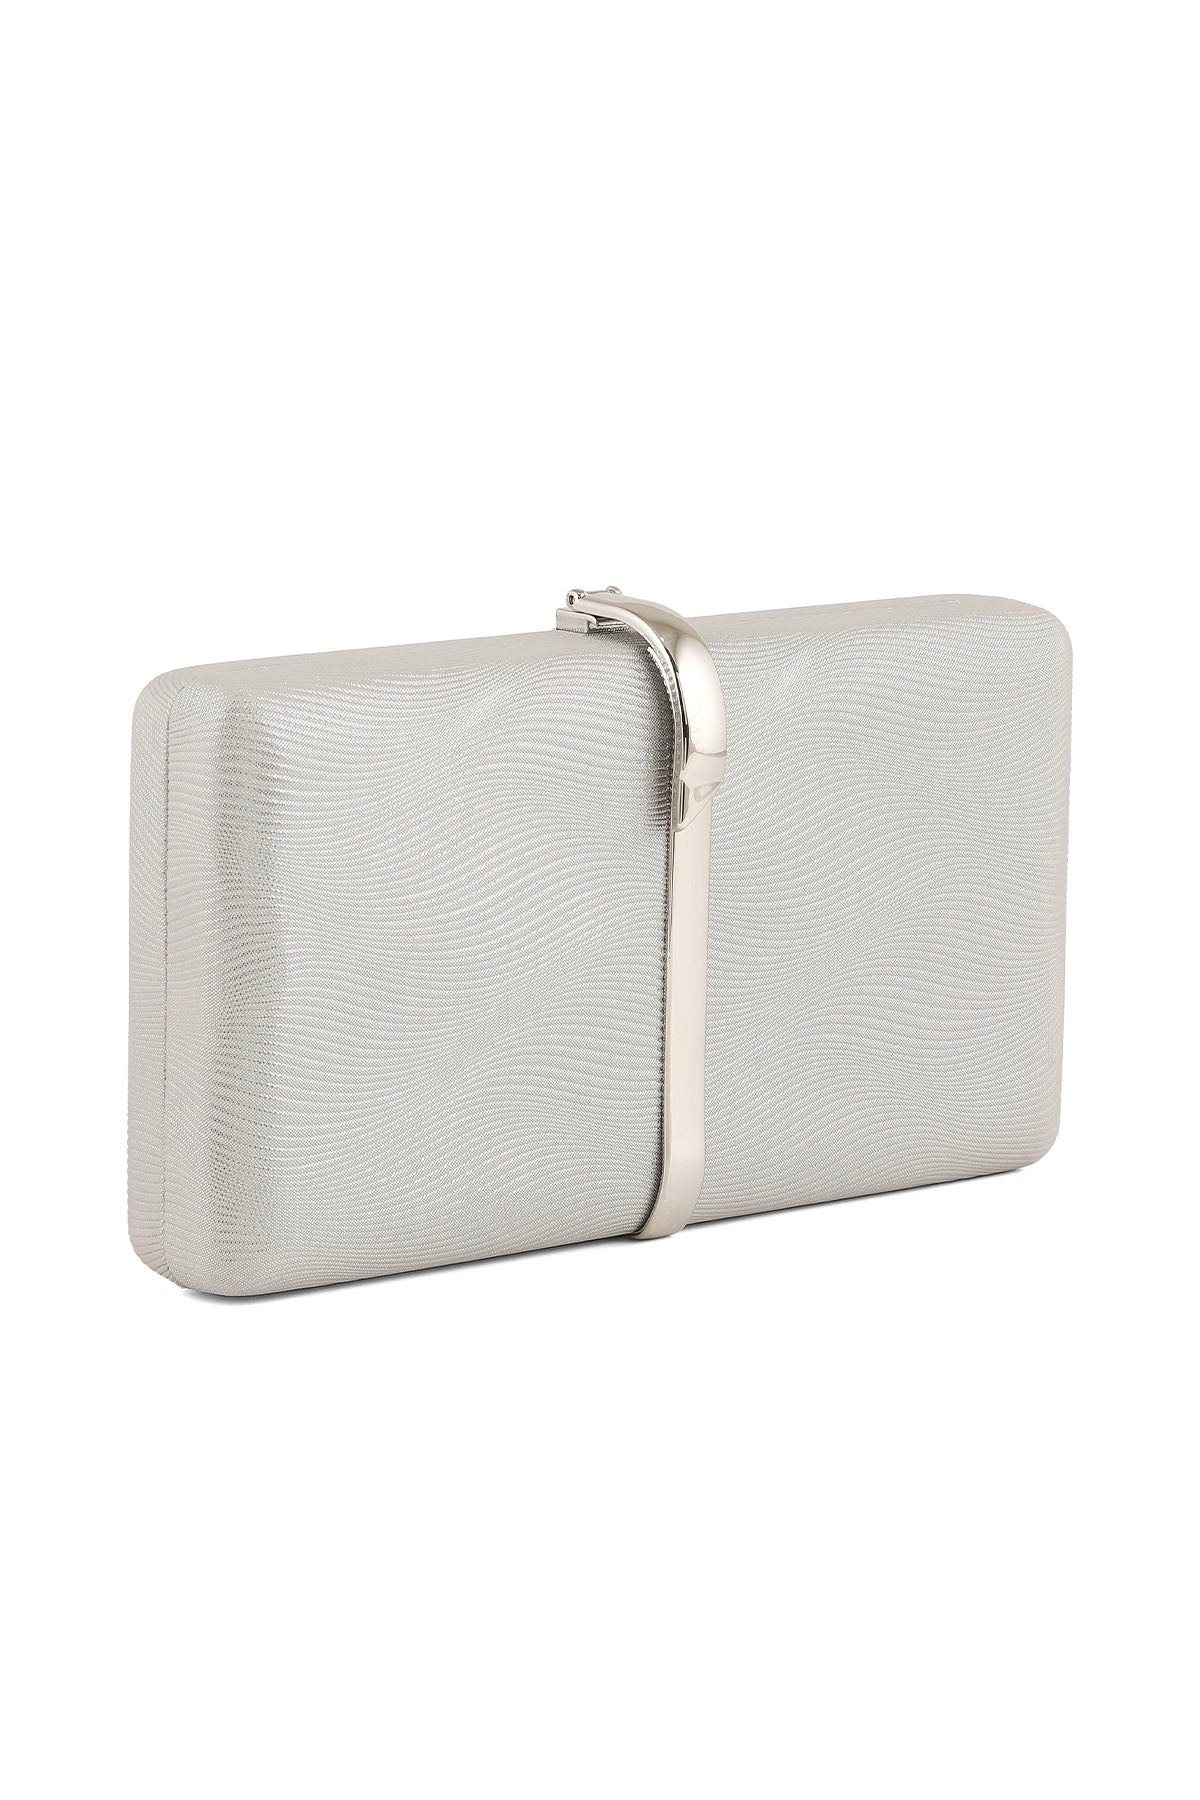 Flap Shoulder Bags B21571-Silver